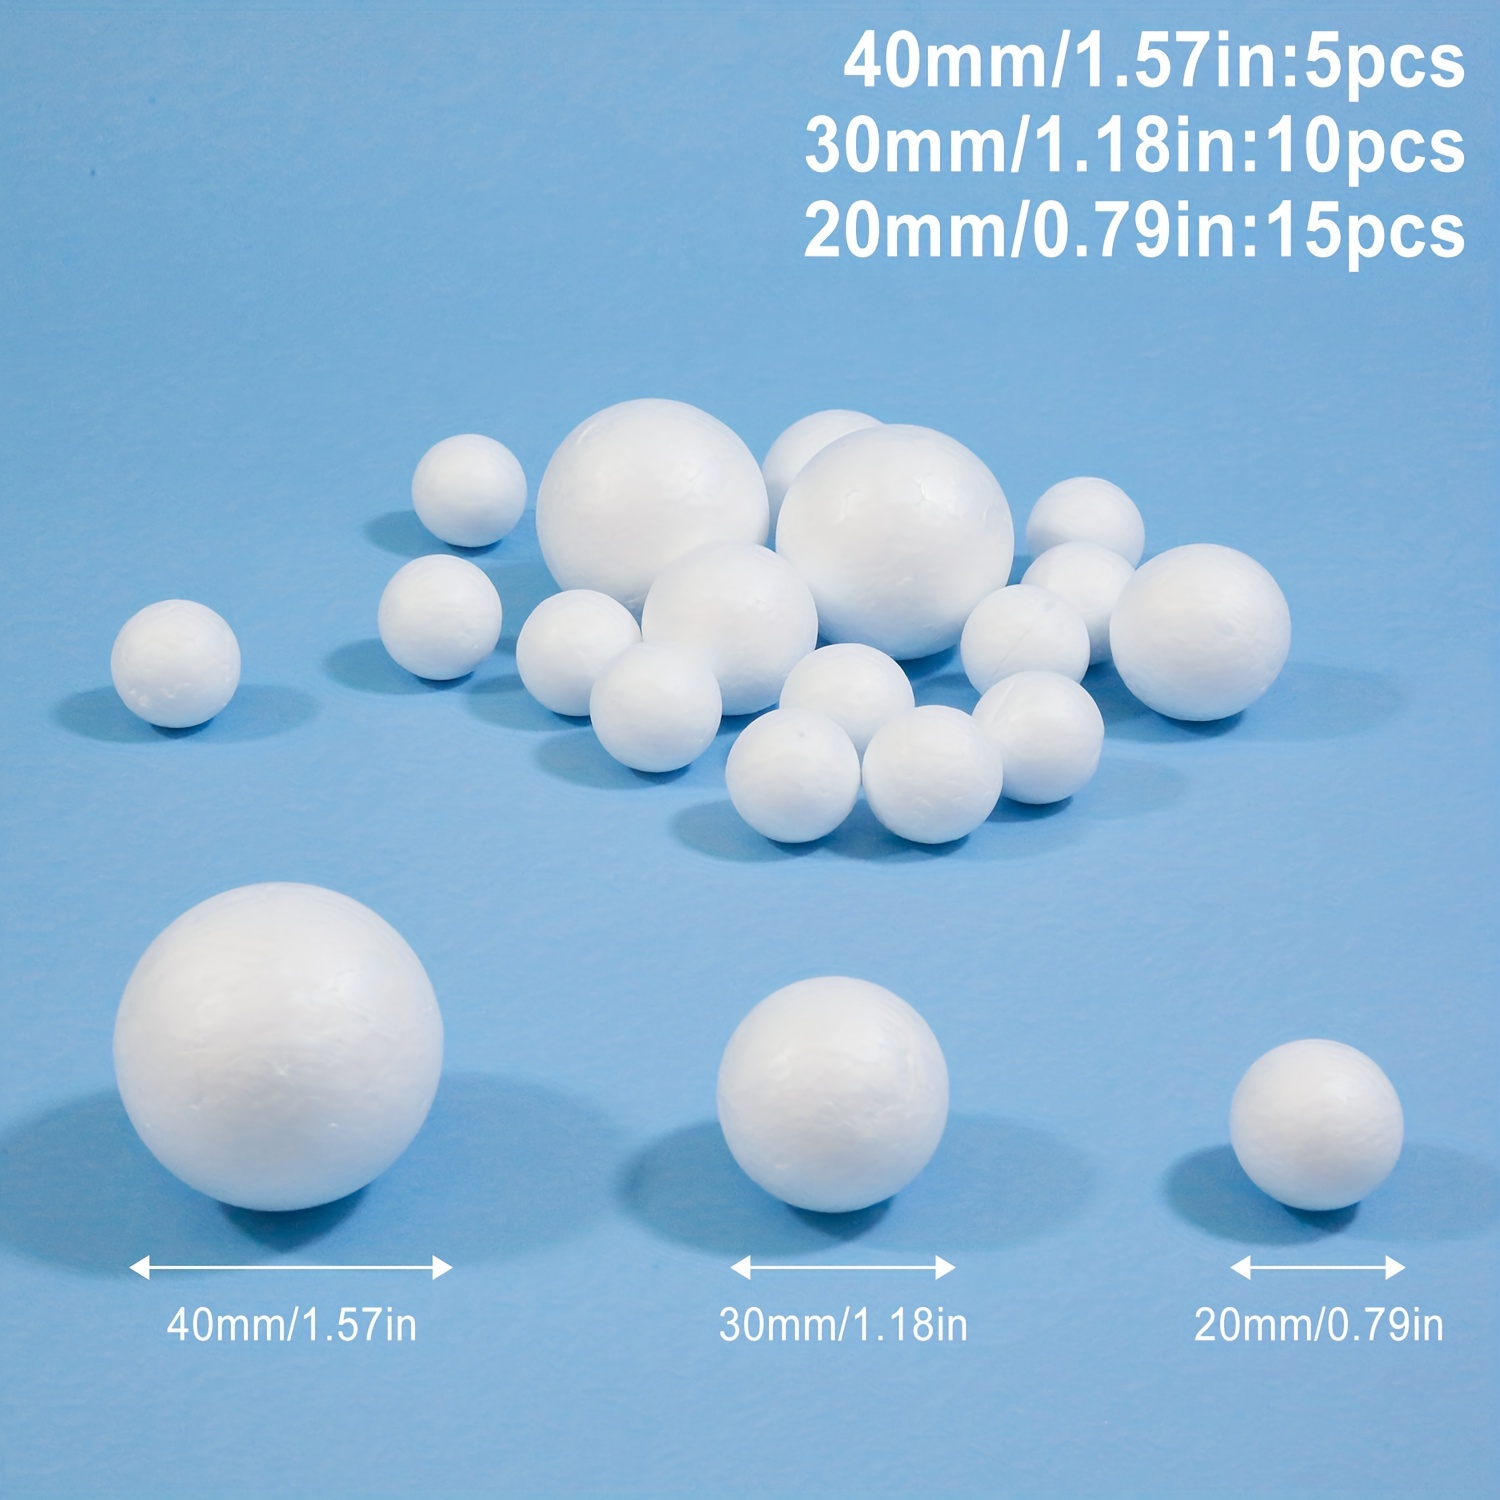 Styrofoam Balls 2-Inch, Each